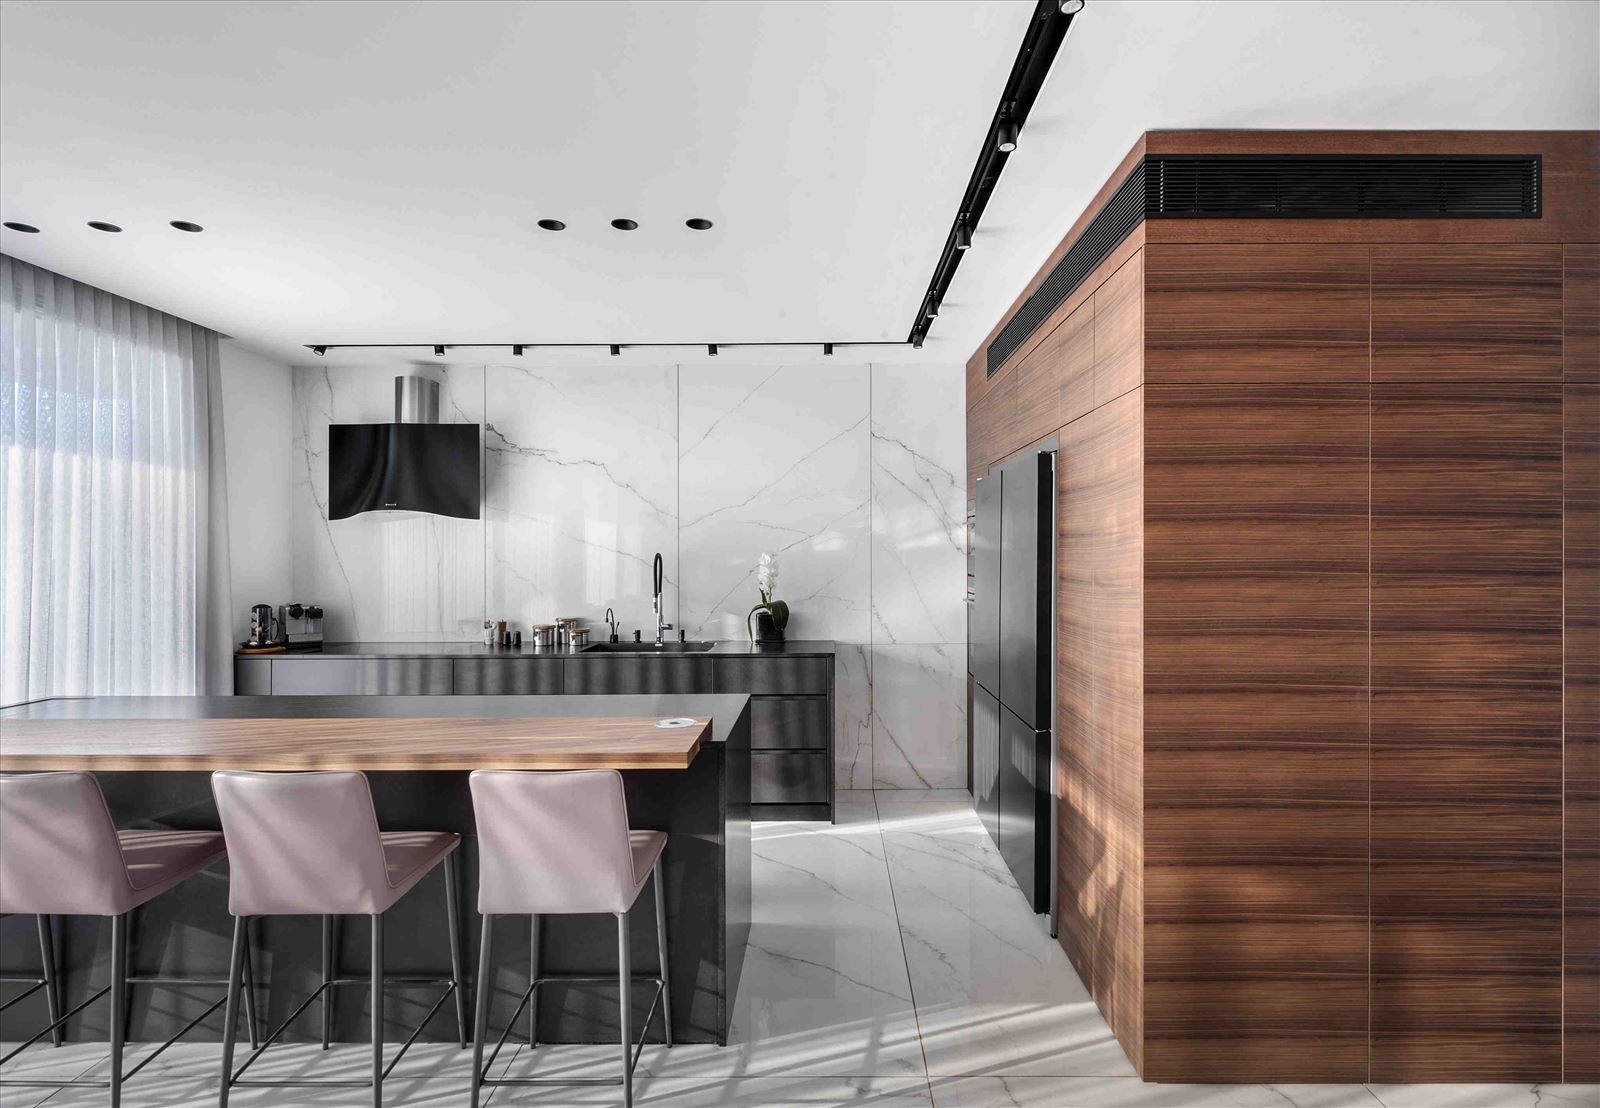 Apartment Project פרויקט התאורה במטבח על ידי קמחי תאורה